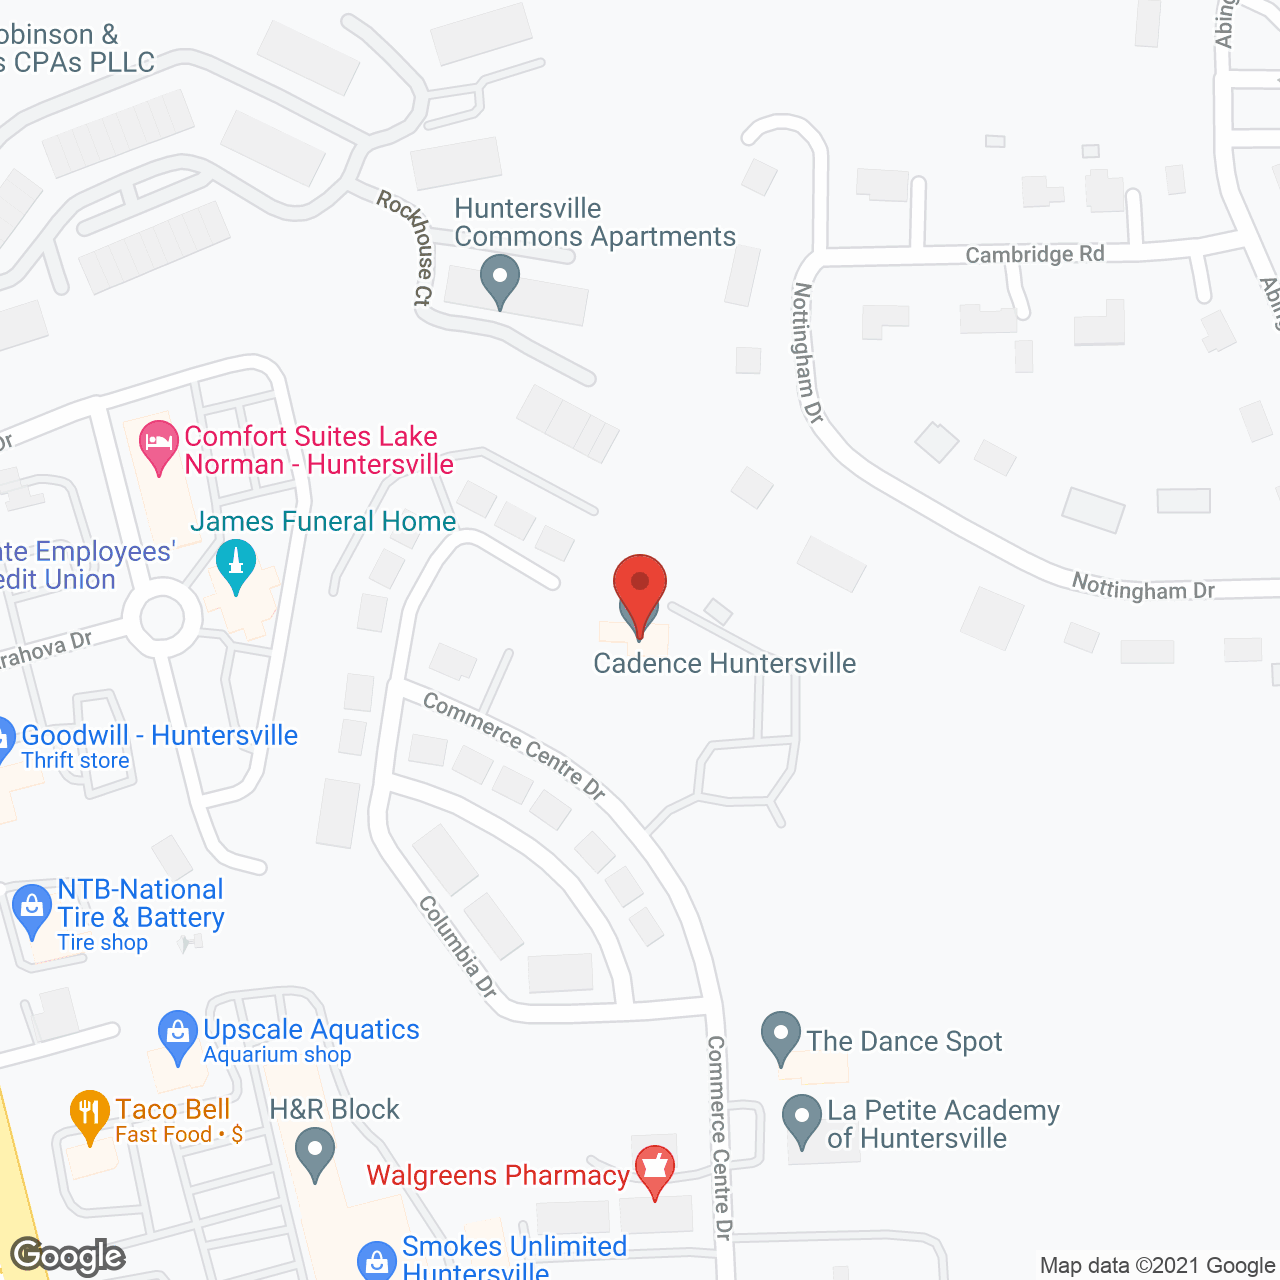 Cadence at Huntersville in google map